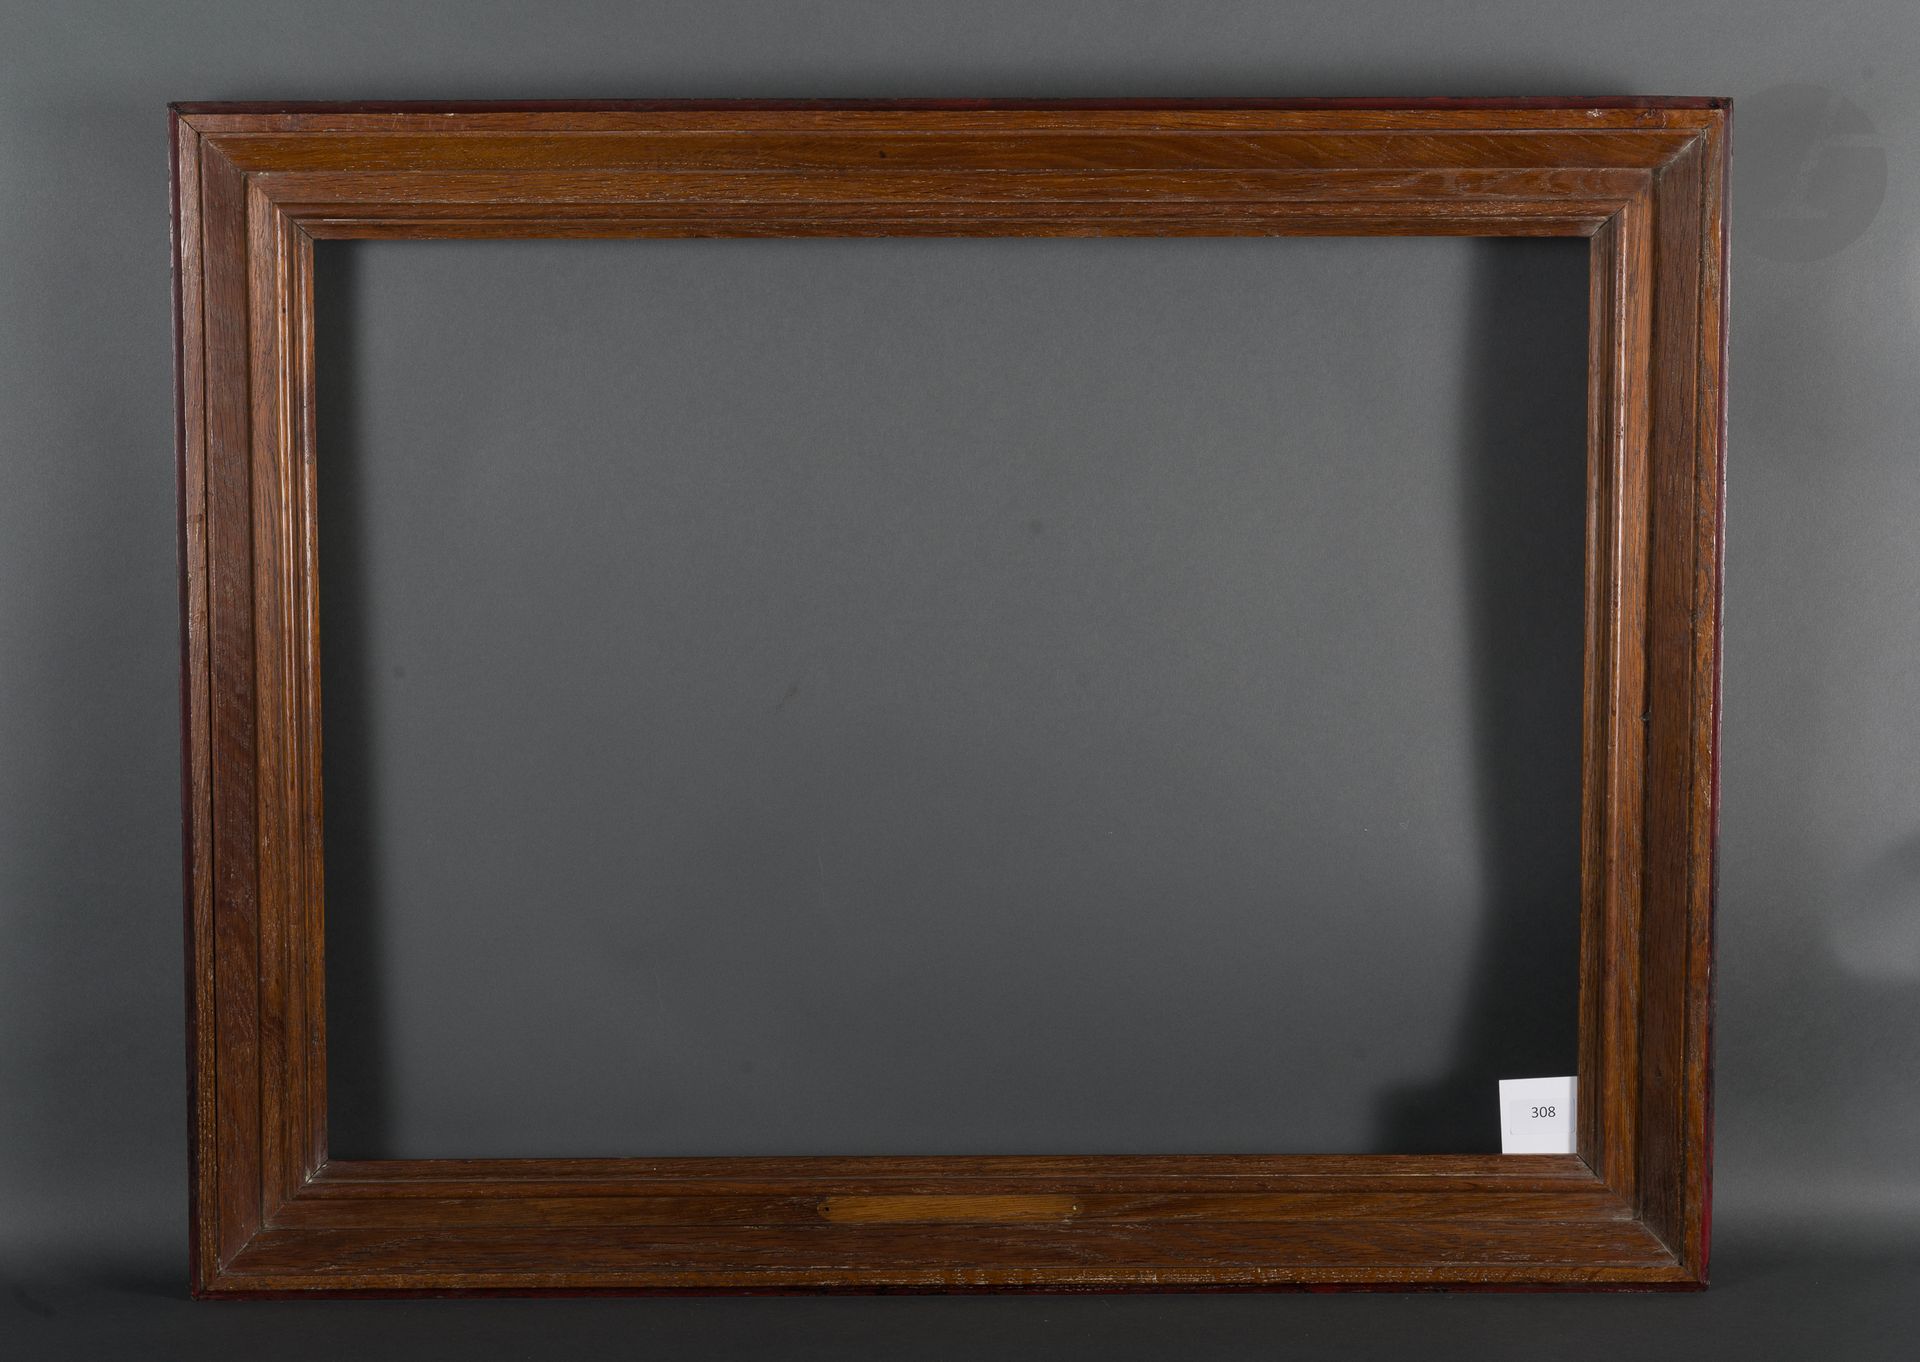 Null Marco de caoba moldeado. Siglo XIX.
54,8 x 75 cm - Perfil: 7,5 cm